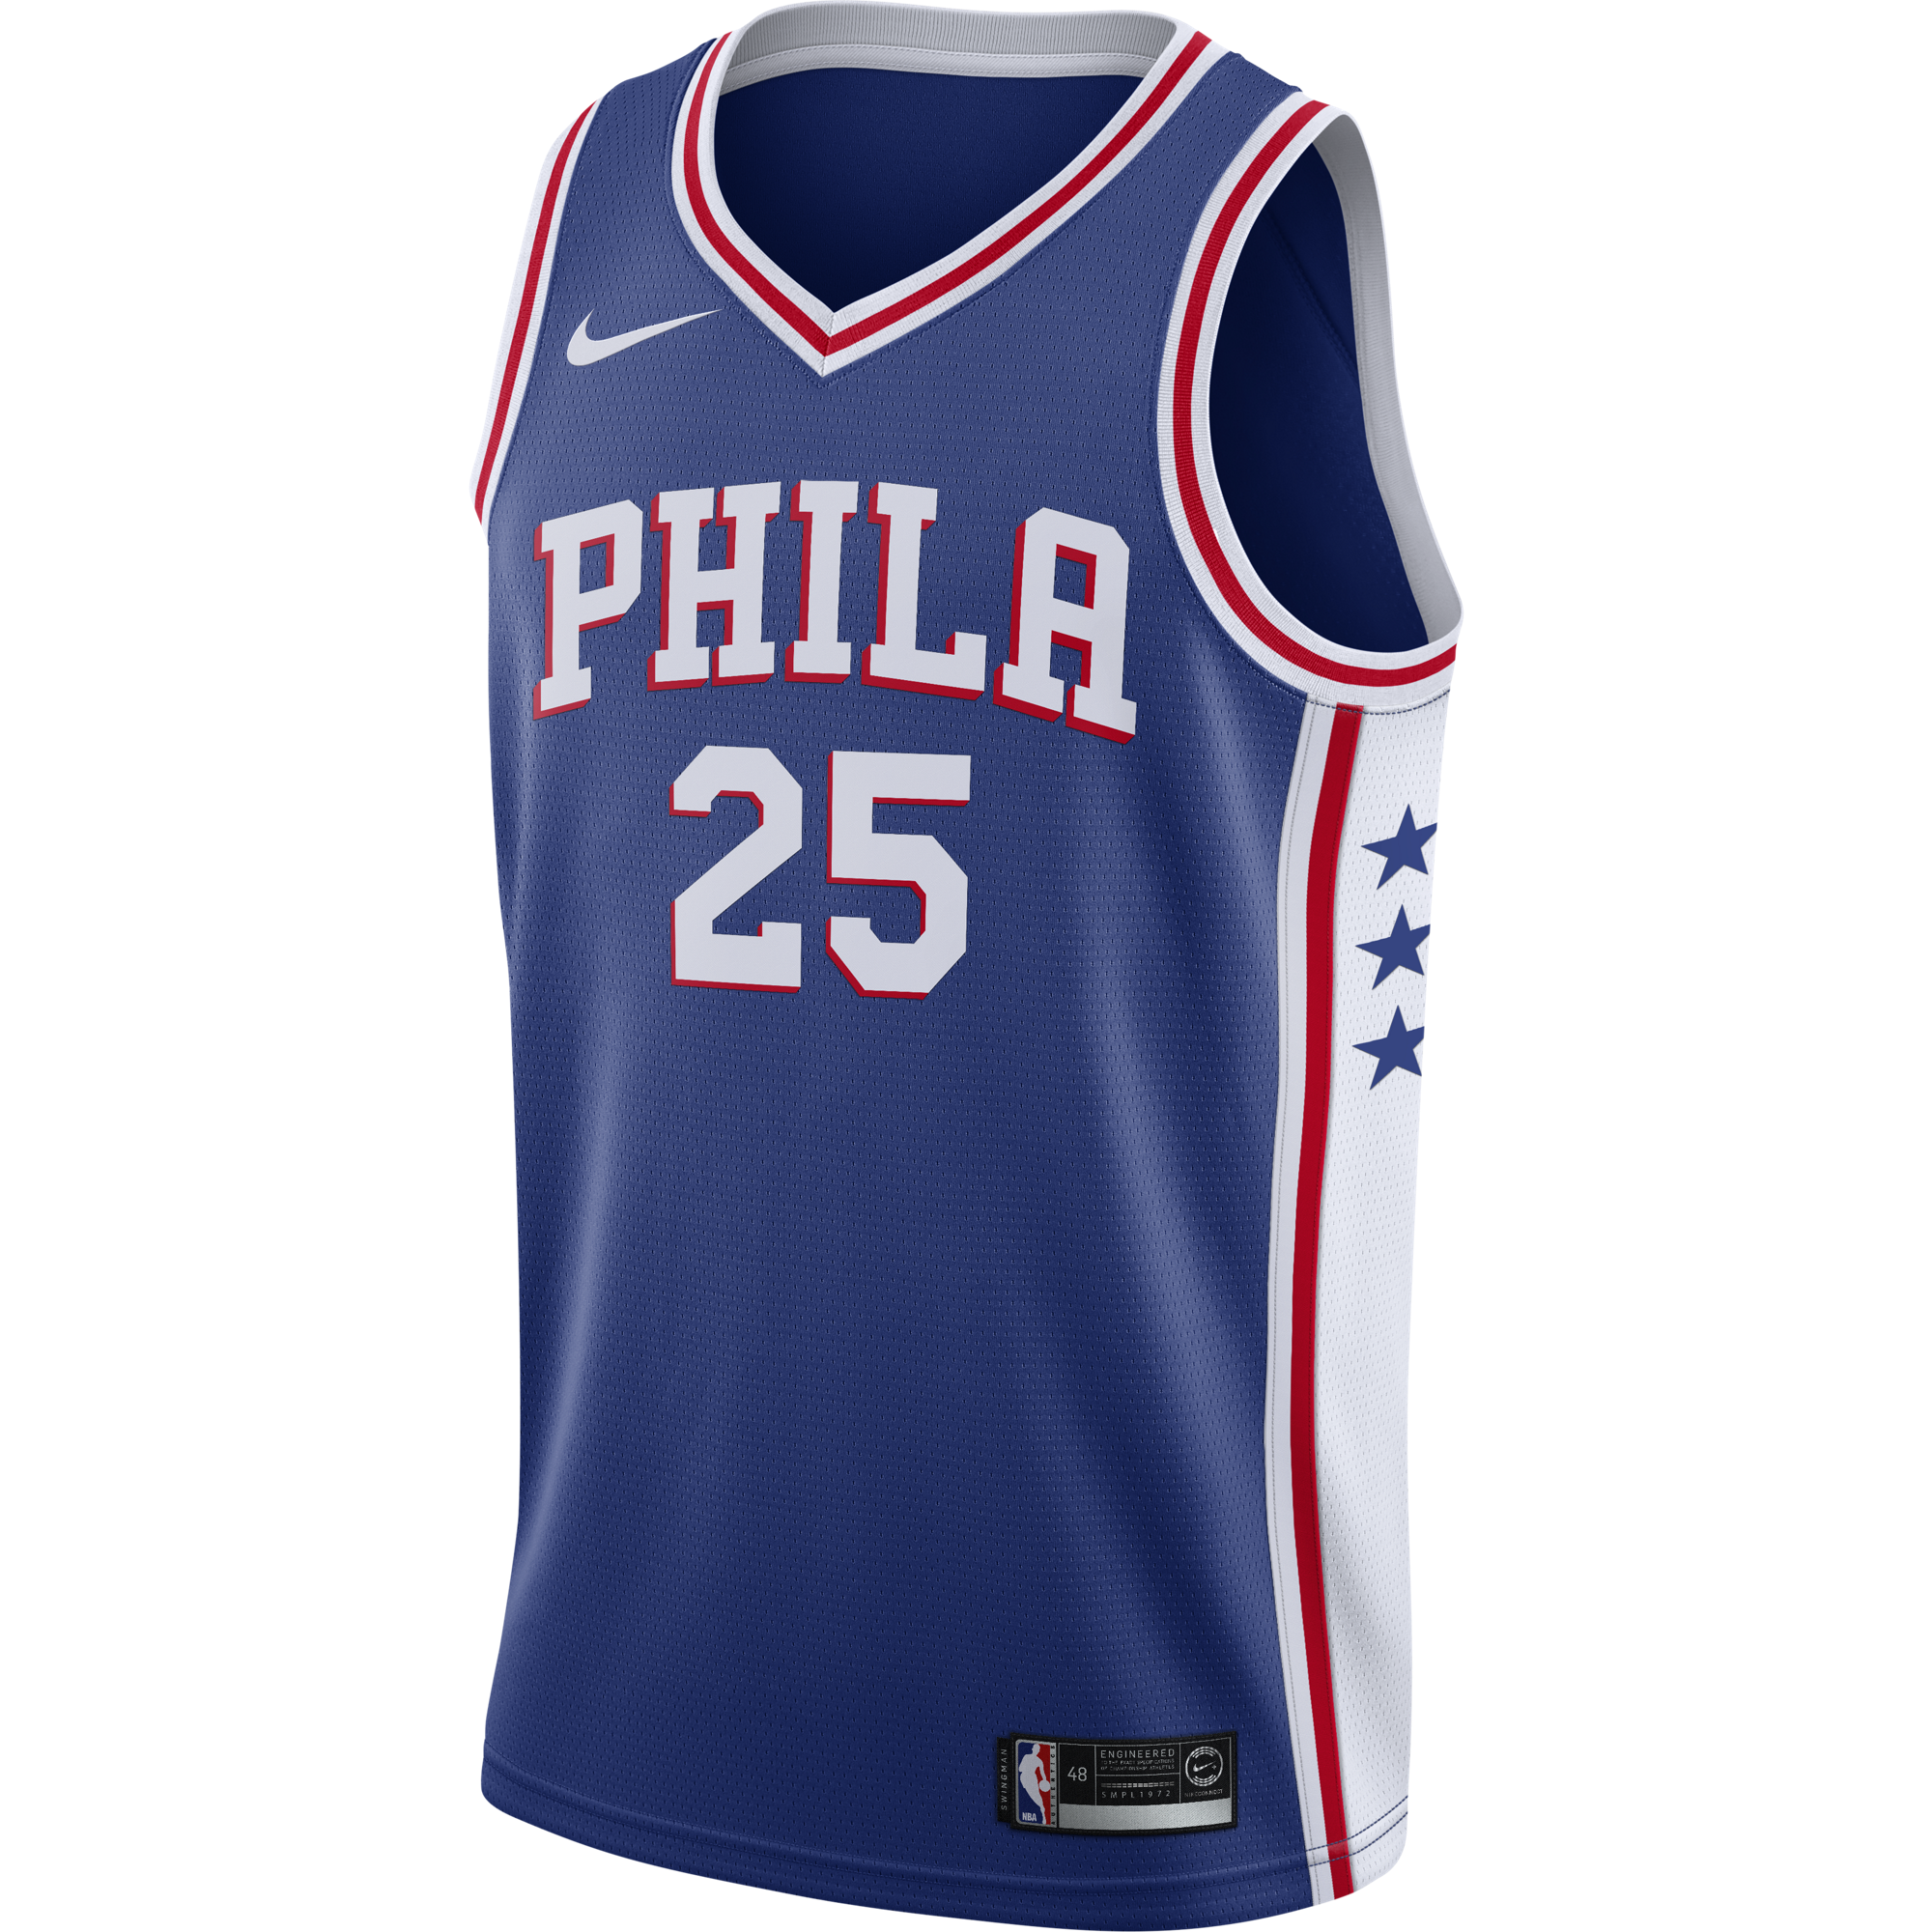 NIKE NBA Philadelphia 76ers Jersey 25 Ben Simmons in Blue Size XL